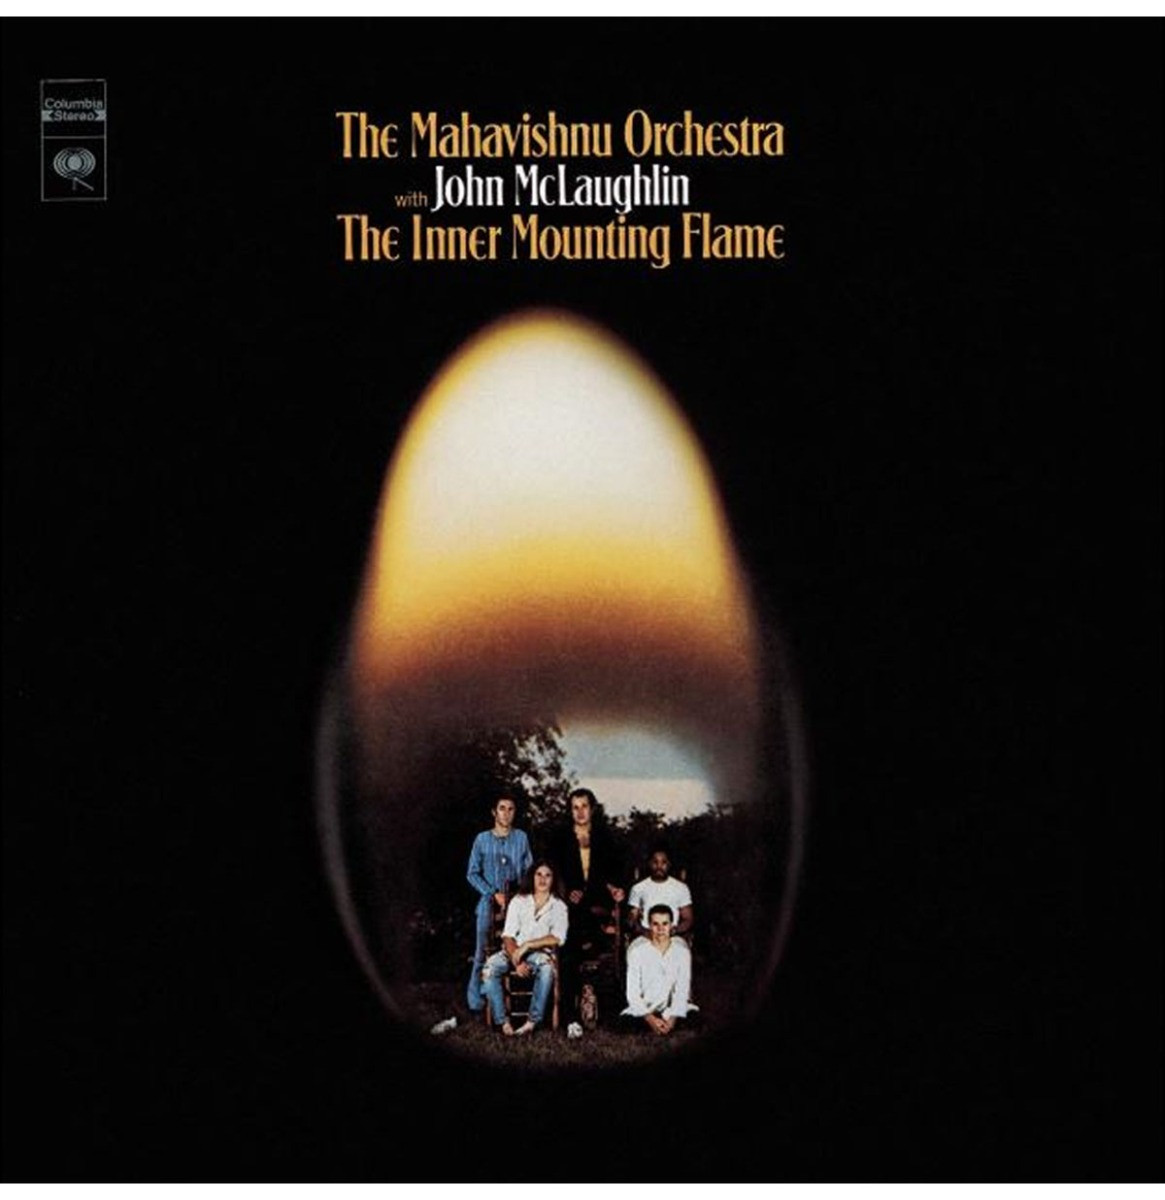 The Mahavishnu Orchestra with John McLaughlin - The Inner Mounting Flame LP